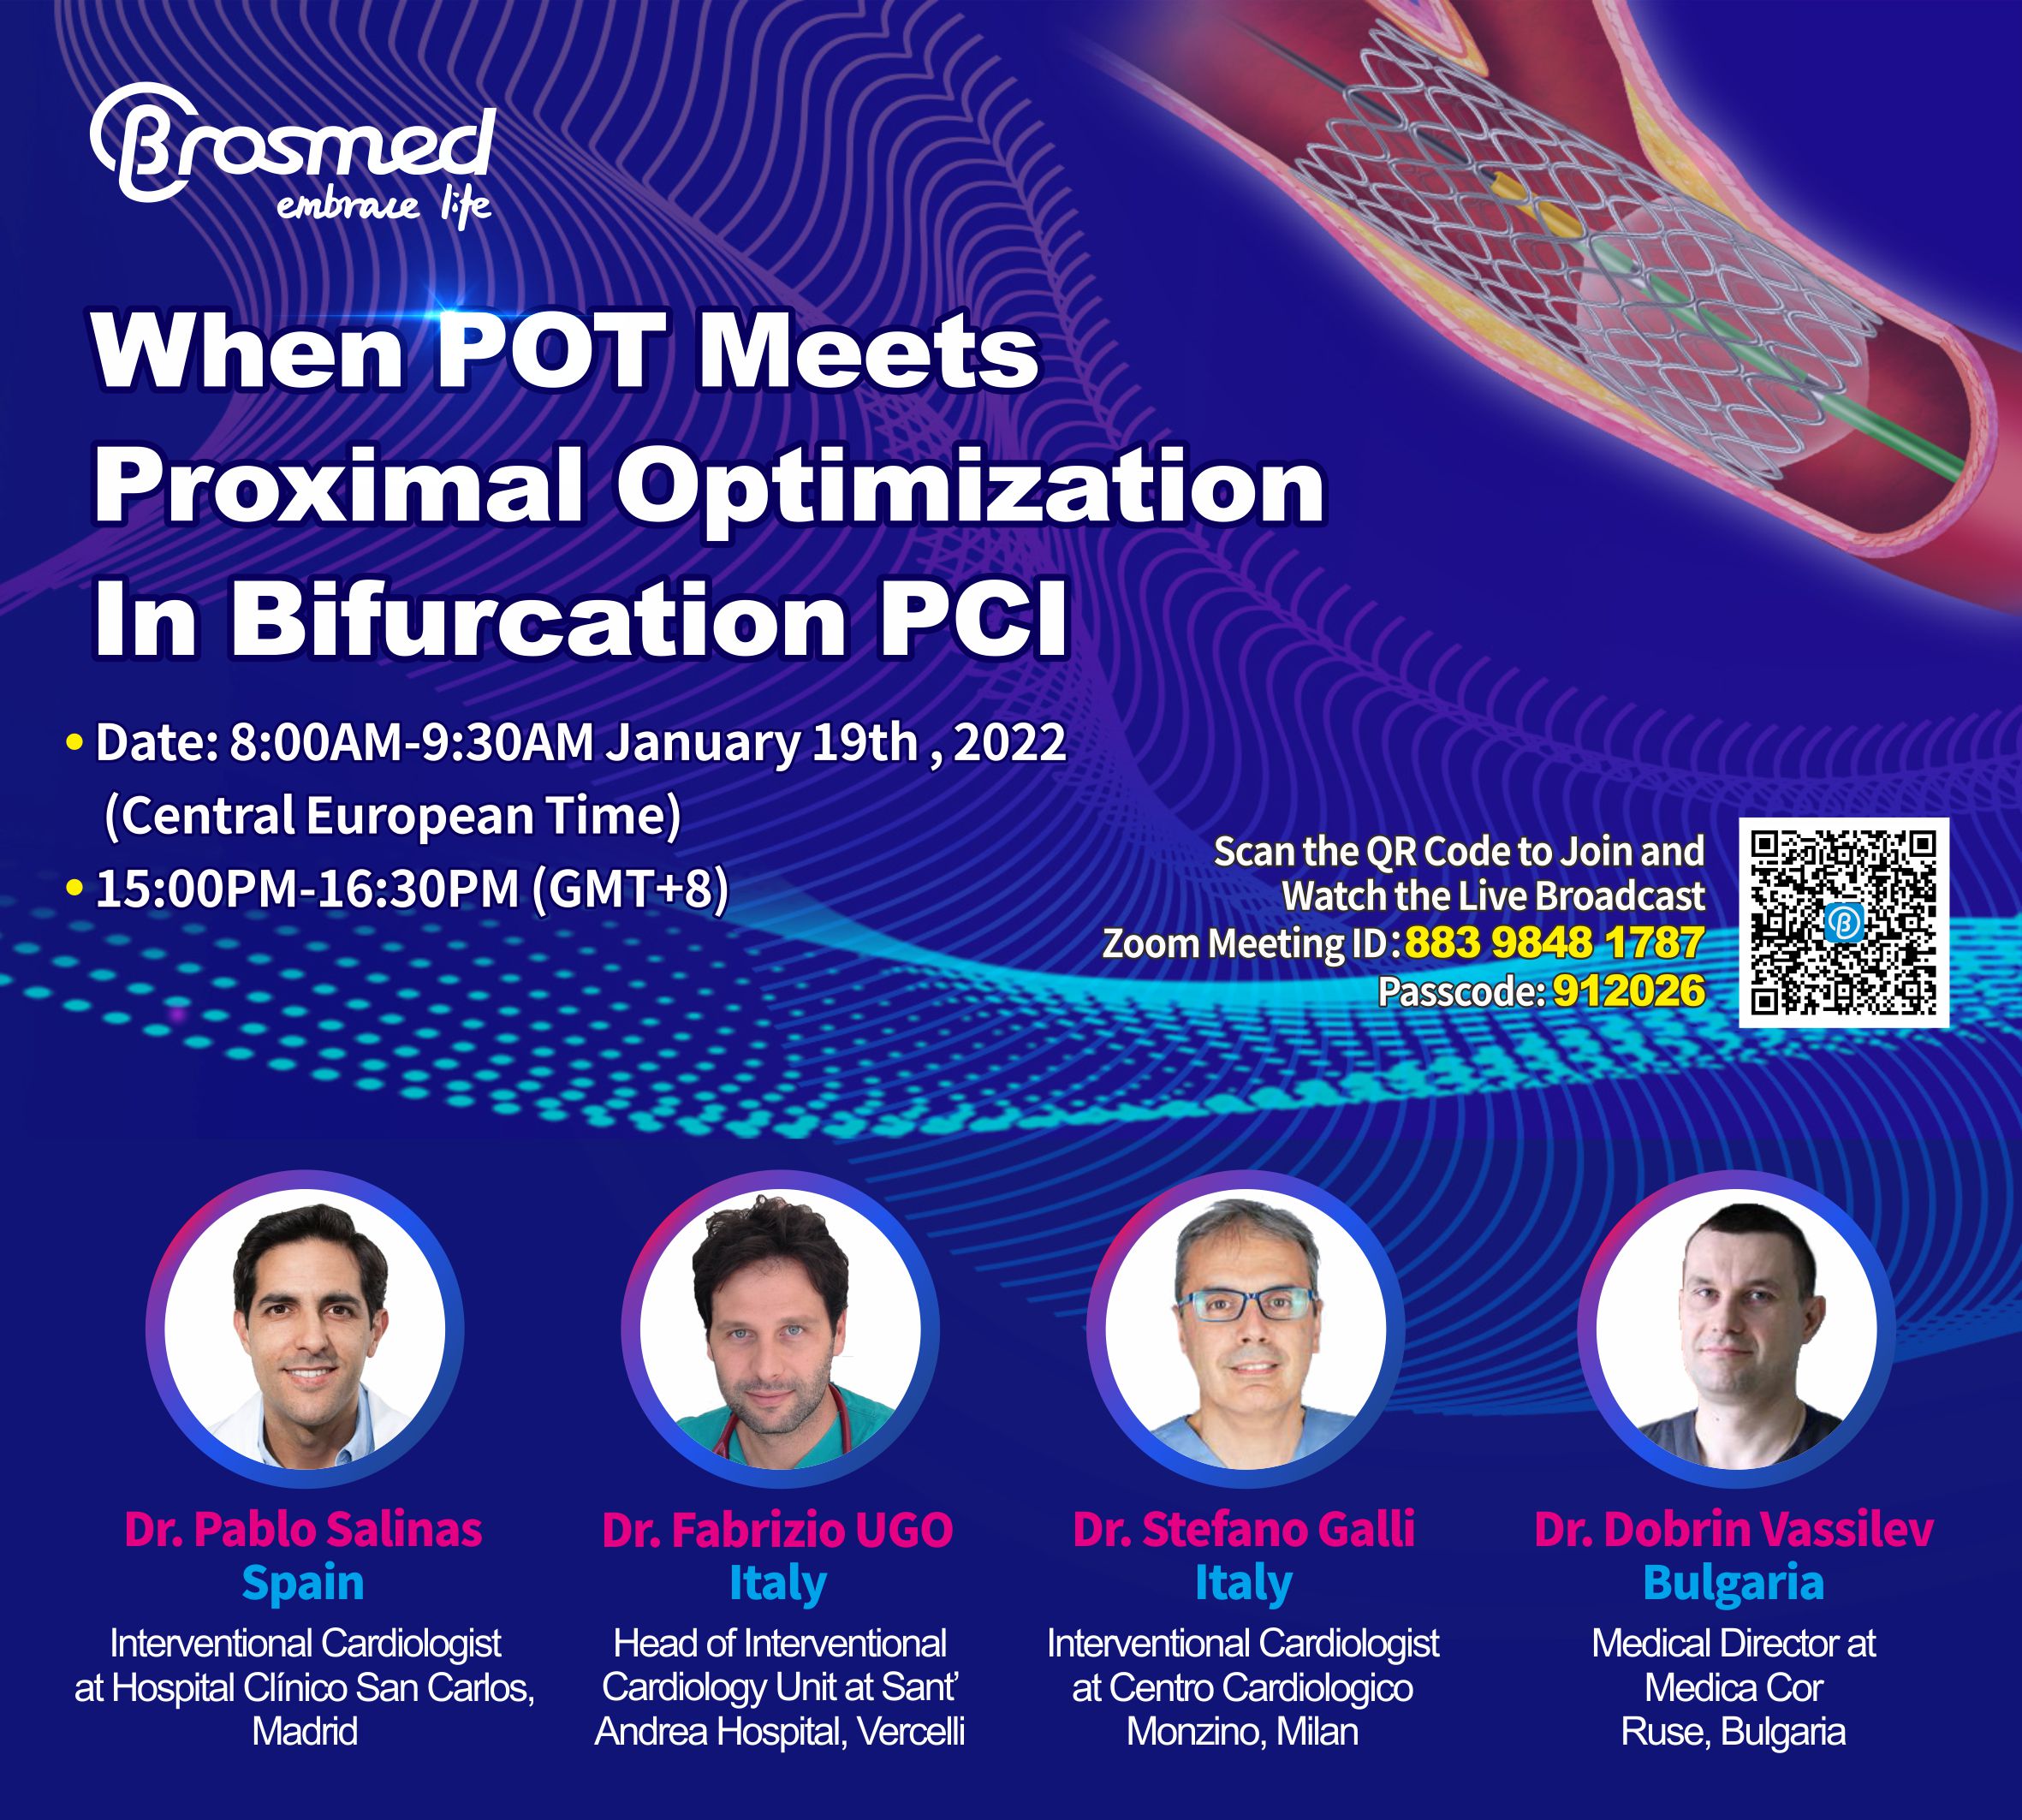 Webinar Announcement: When POT Meets Proximal Optimization in bifurcation PCI